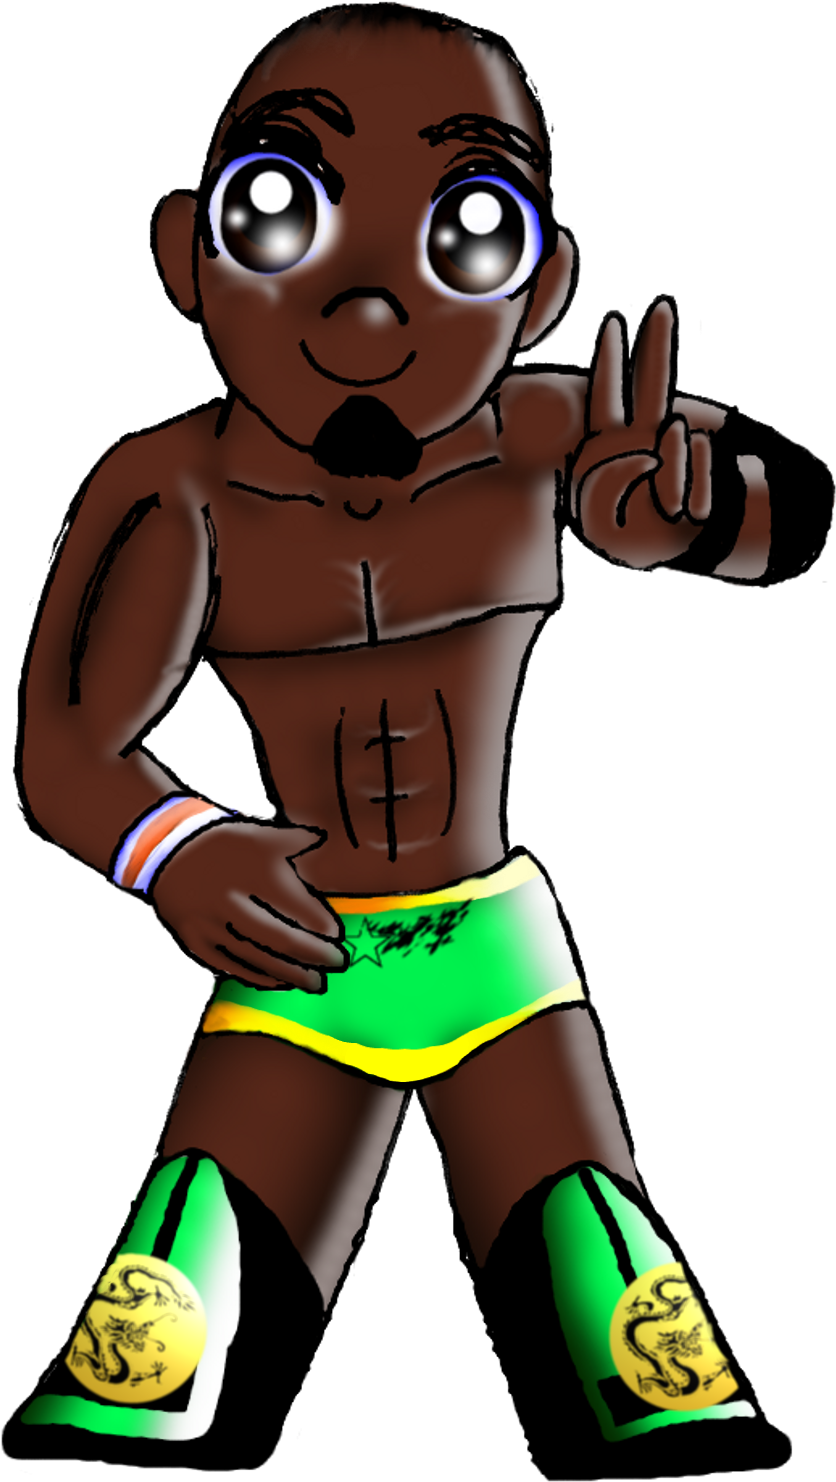 A Cartoon Of A Man In Underwear